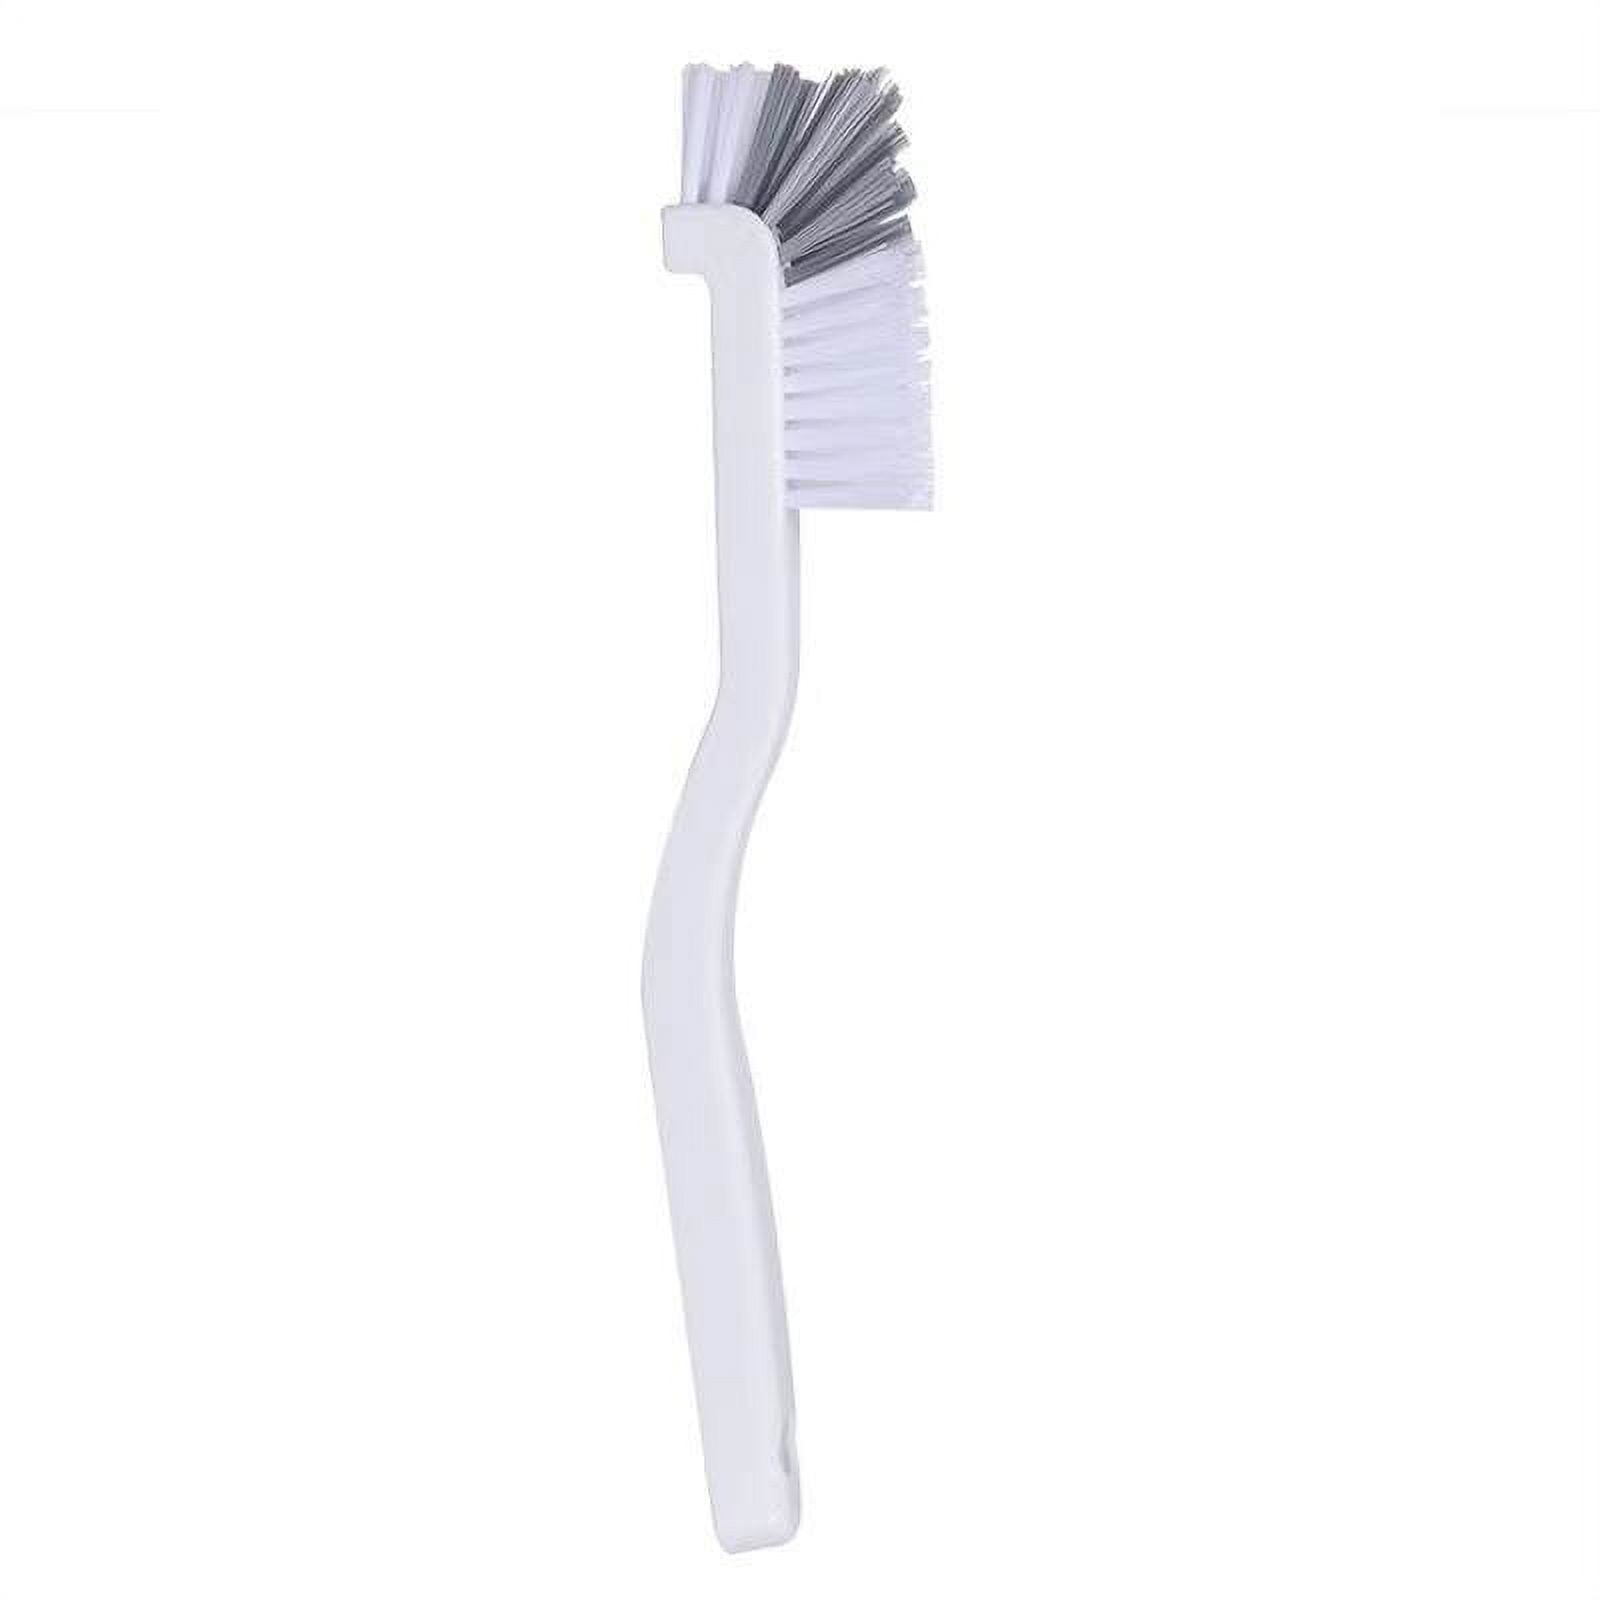 6pcs Drill Brush Attachment Set, 5pcs Scrubber Brushes with 1pcs Extend  Long Attachment, Drill Scrub Brush for Cleaning Shower, Tub, Bathroom (6pcs)